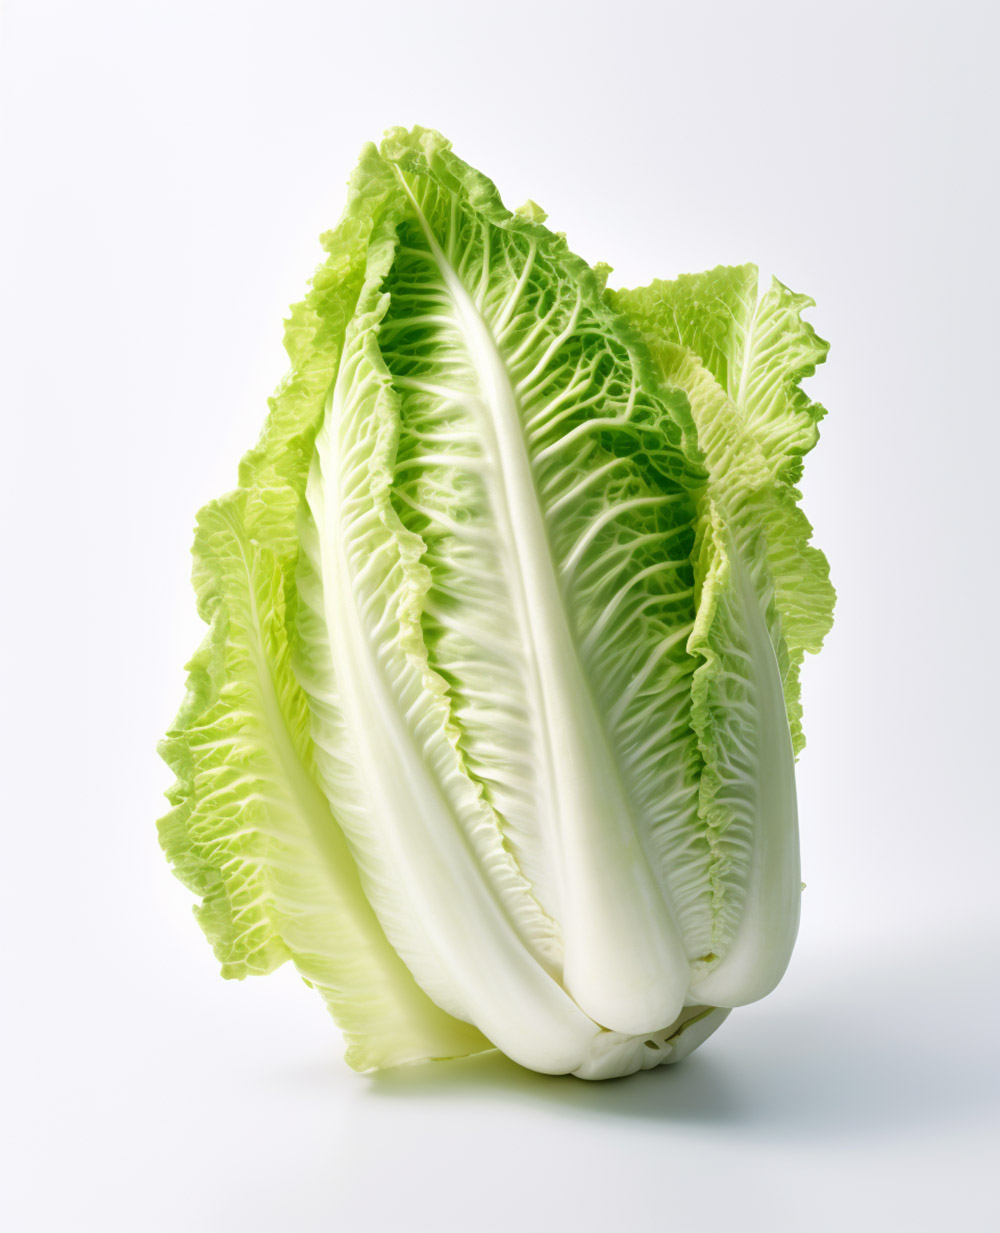 napa cabbage on white